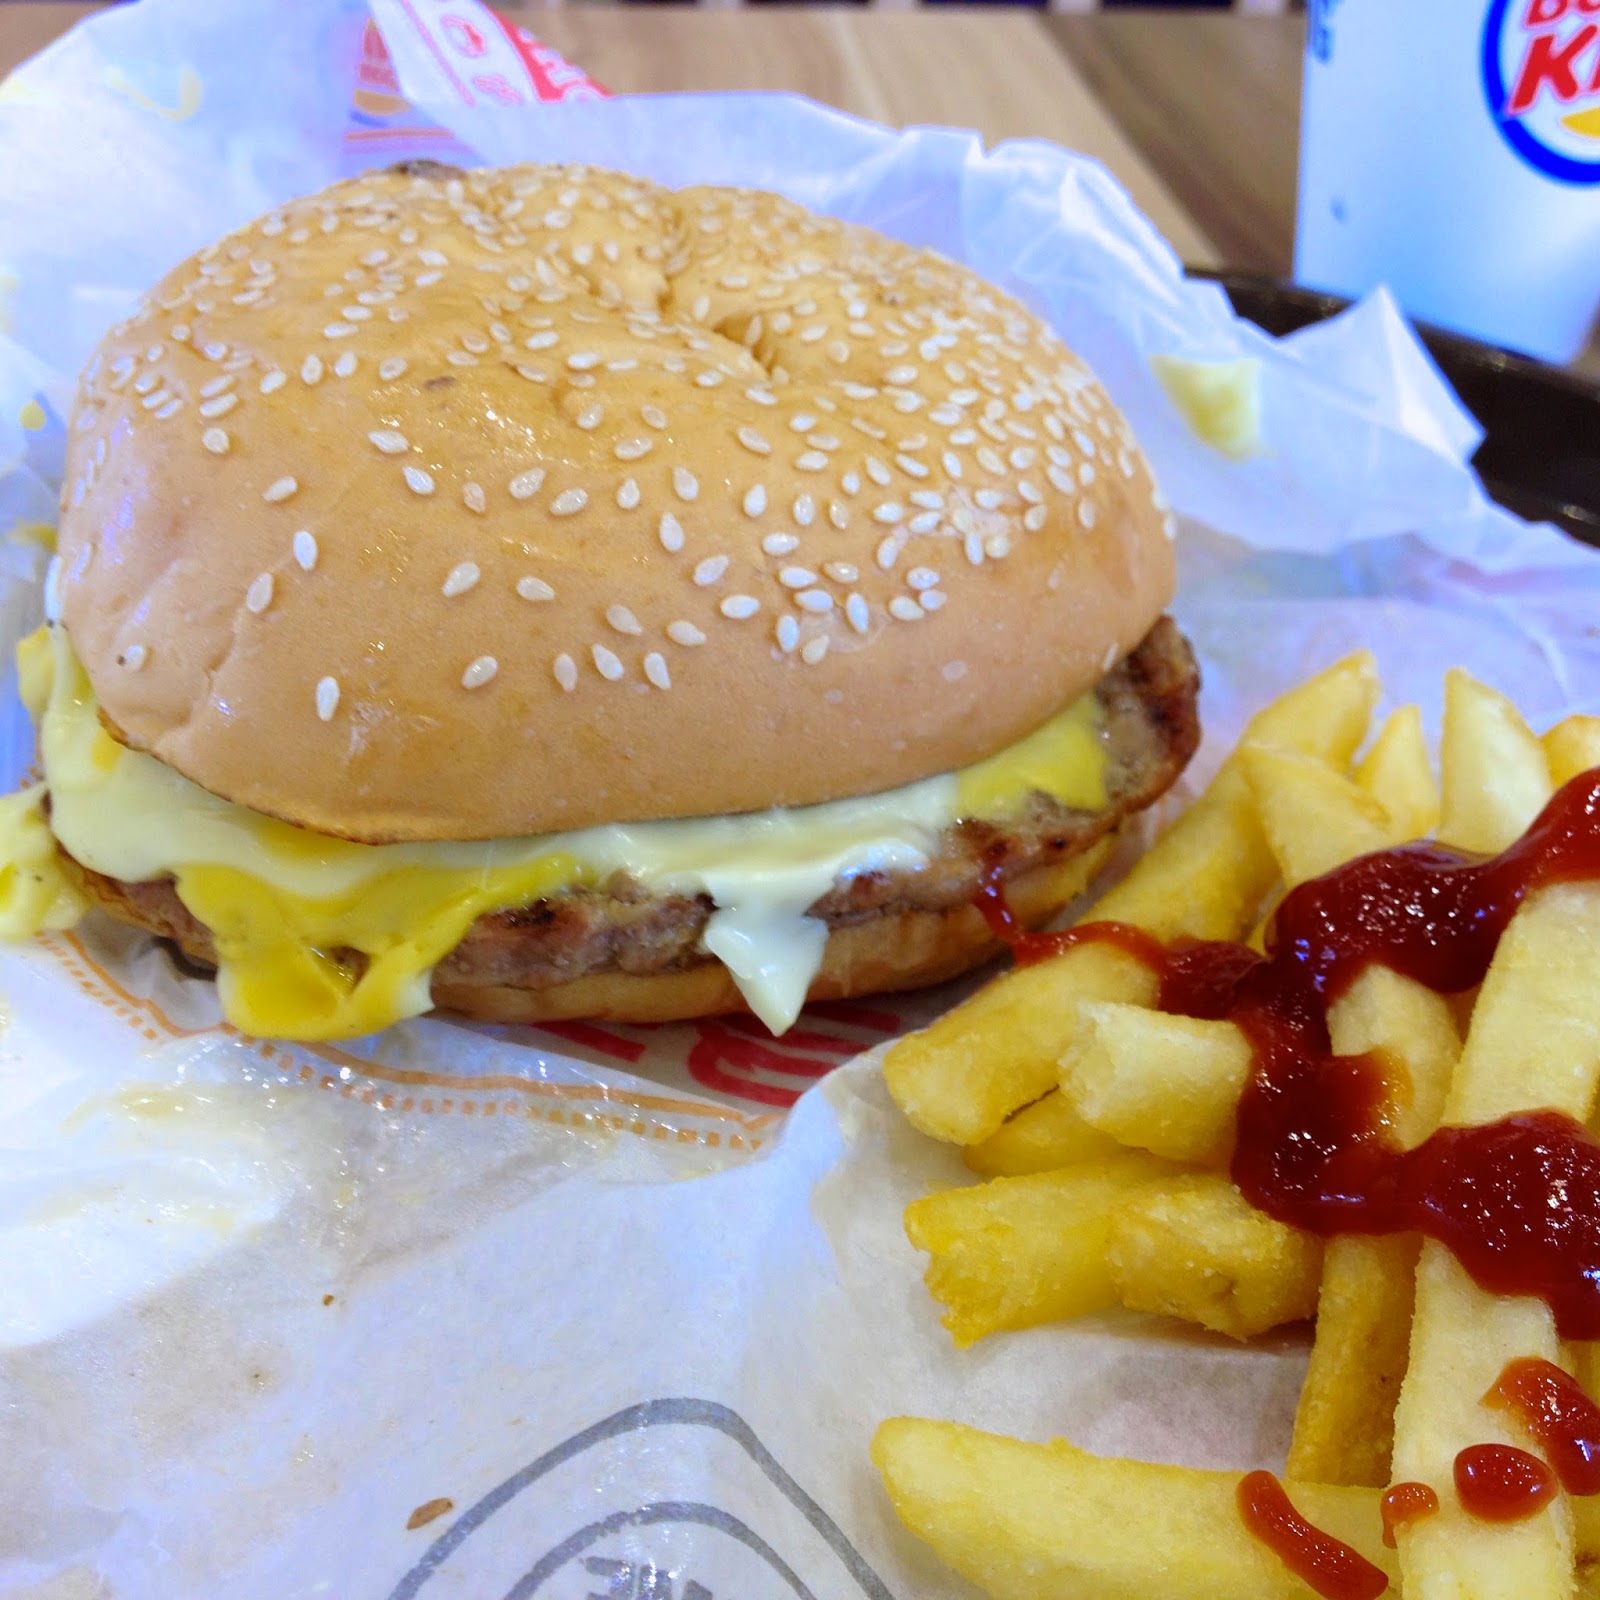 Delicious Cheeseburger from Burger King